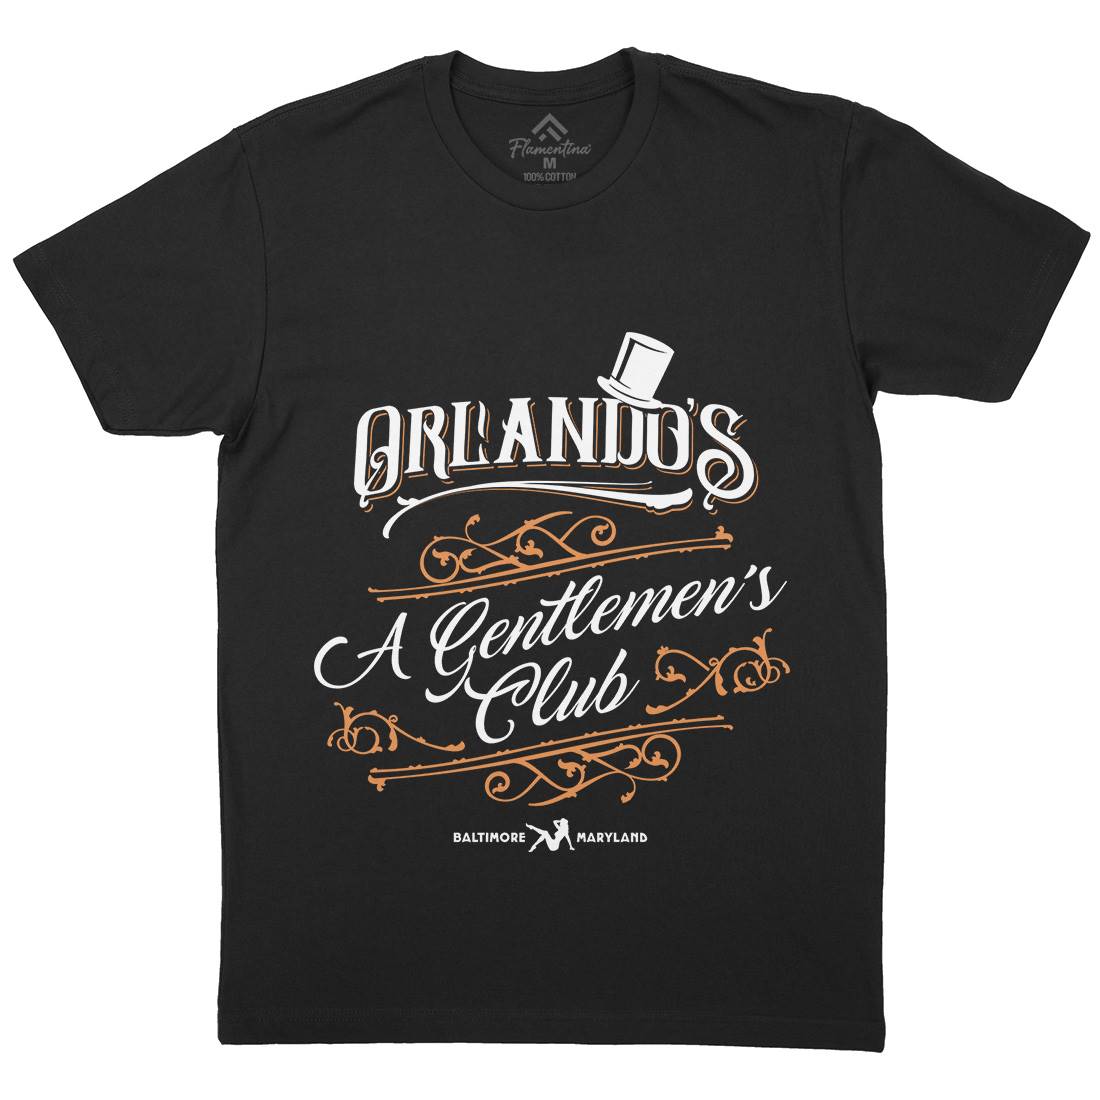 Orlandos Club Mens Organic Crew Neck T-Shirt Drinks D173